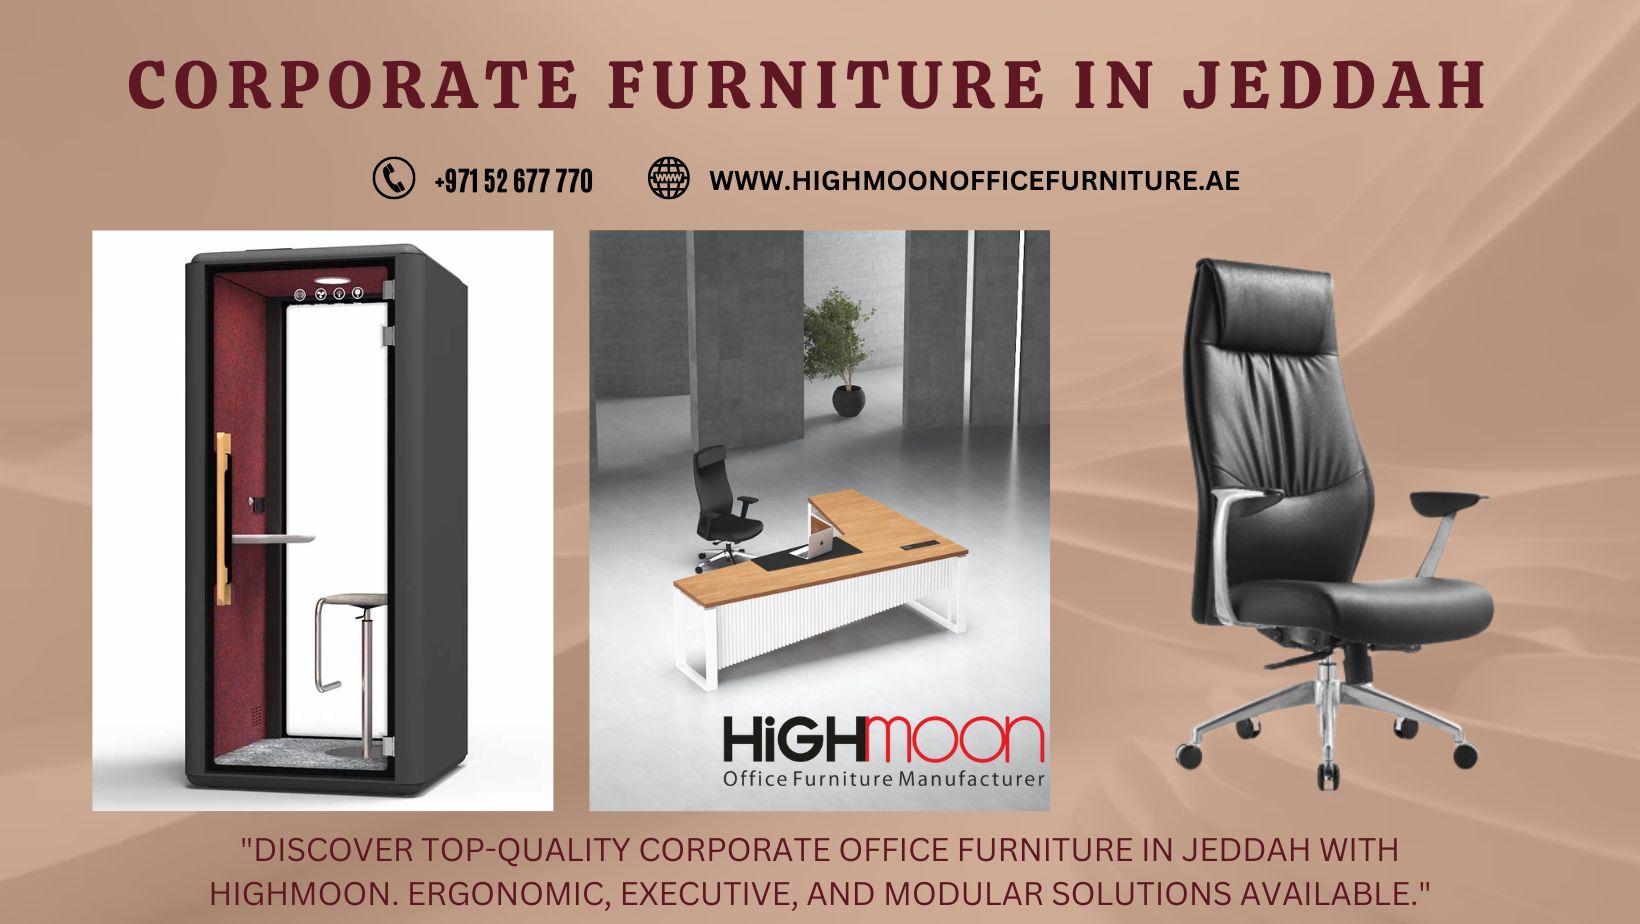 Corporate Office Furniture in Jeddah